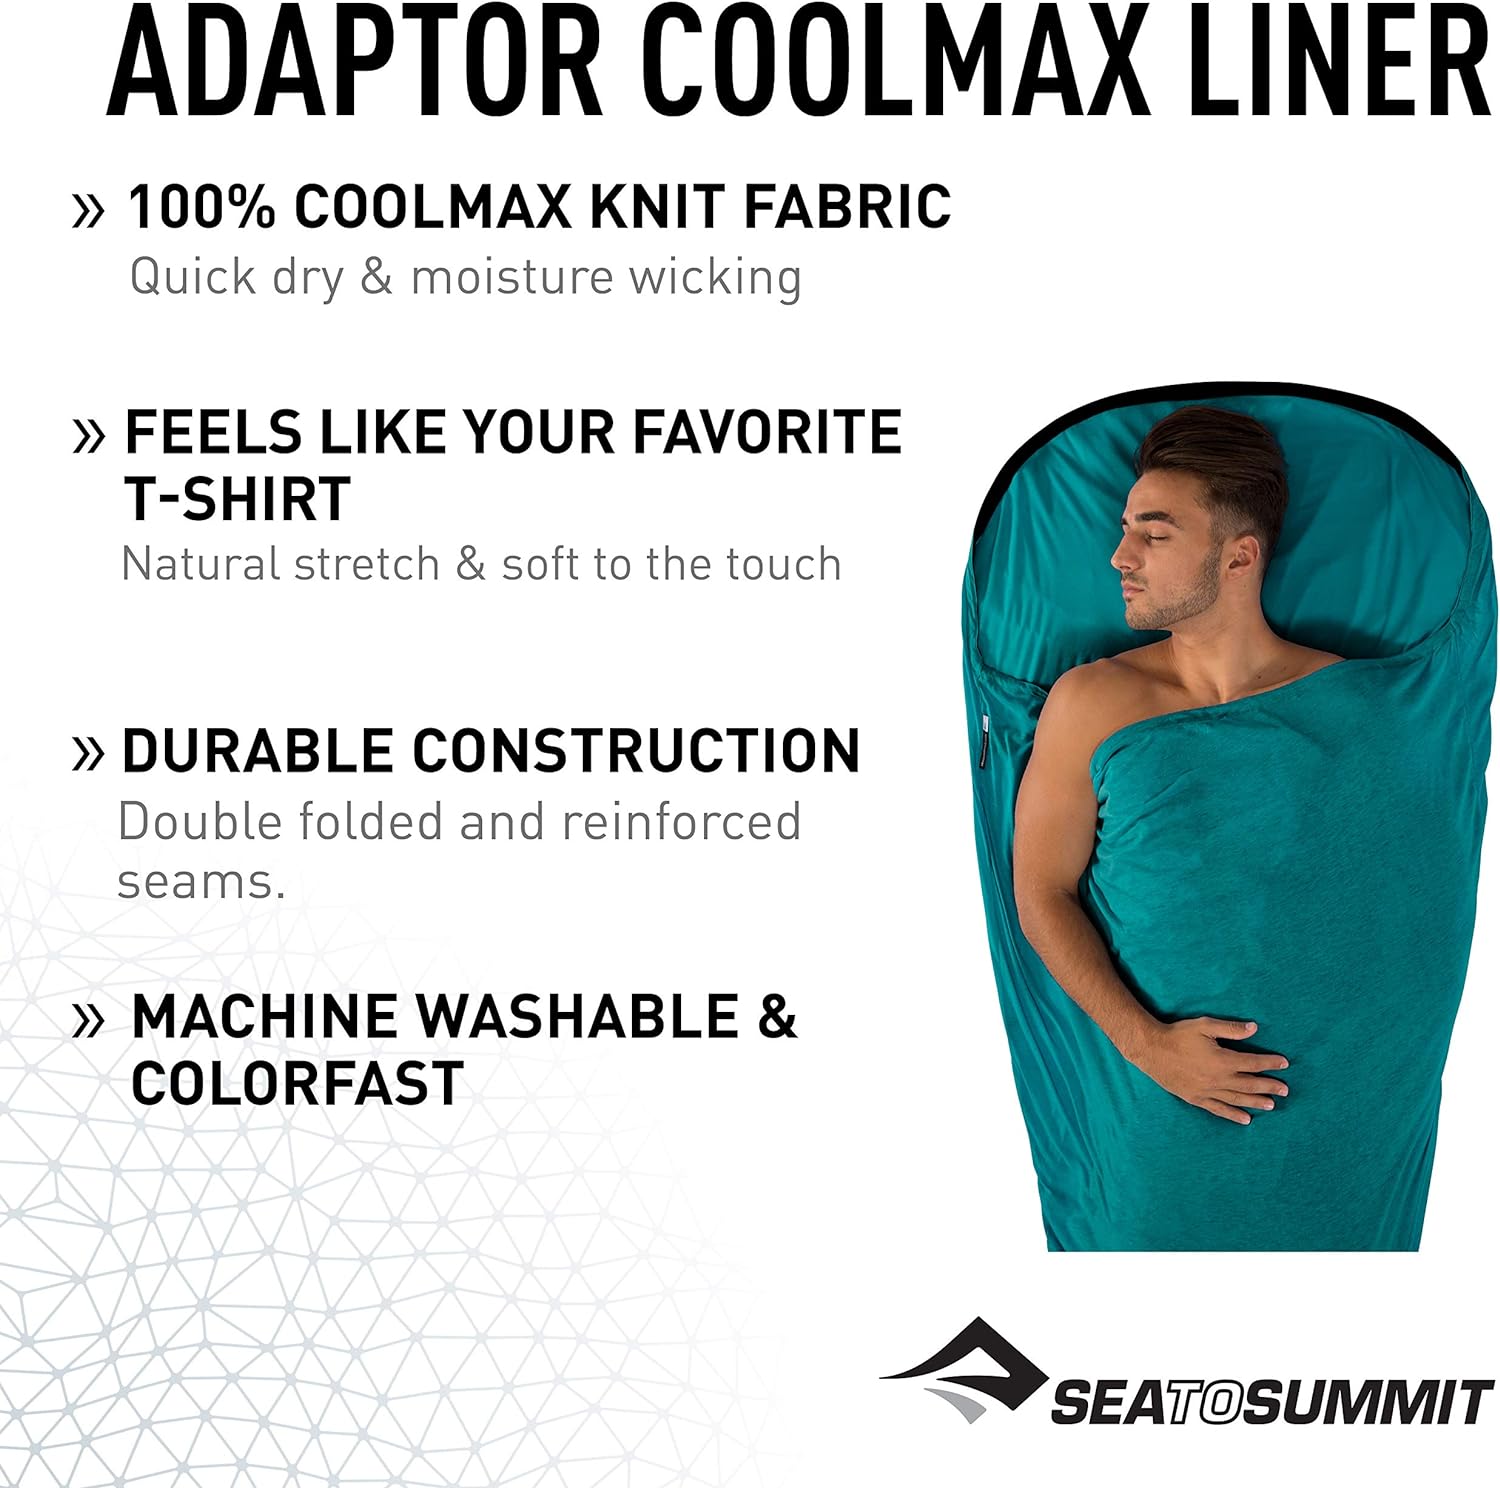 Sea to Summit Coolmax Adaptor Liner